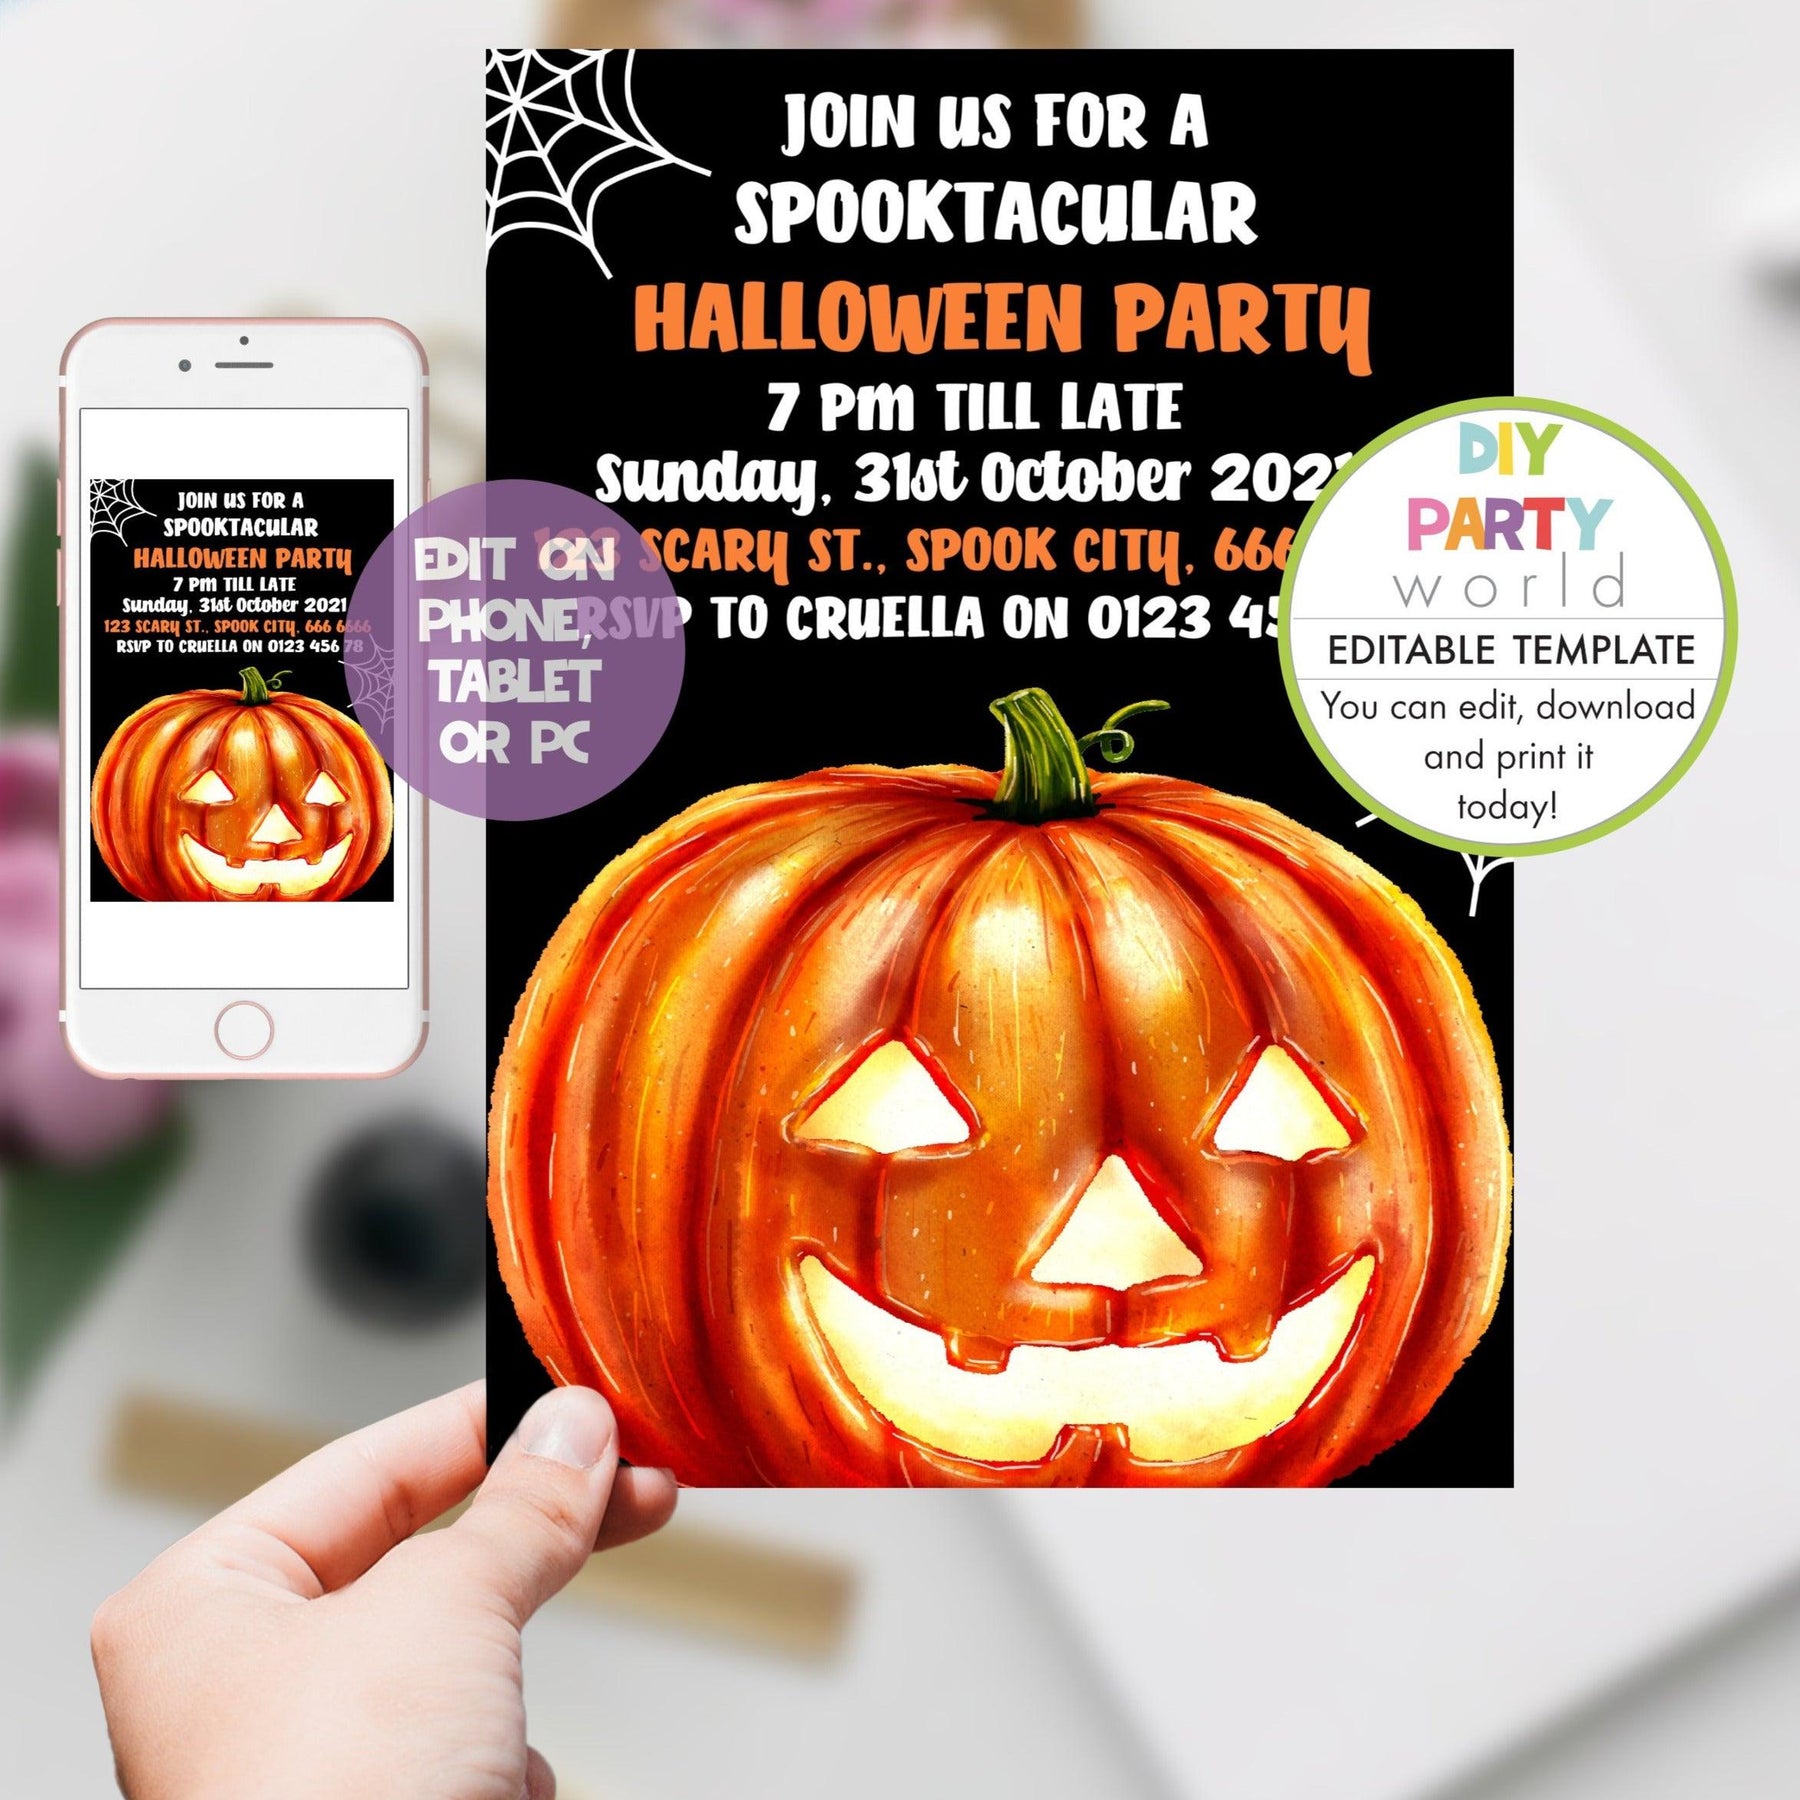 Diy Editable Halloween Party Invitation Template H1004 – Diy Party World